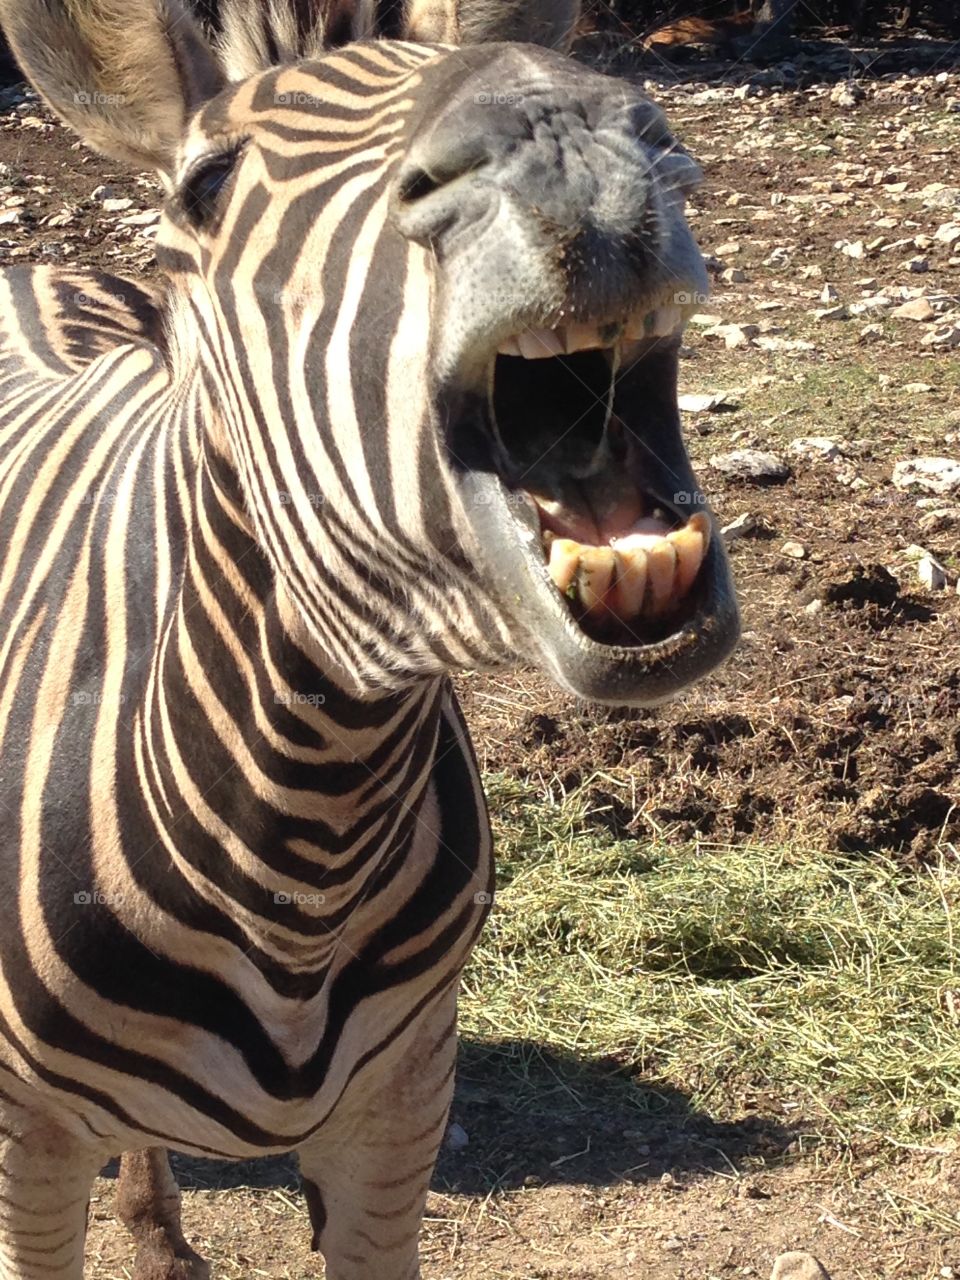 Laughing Zebra